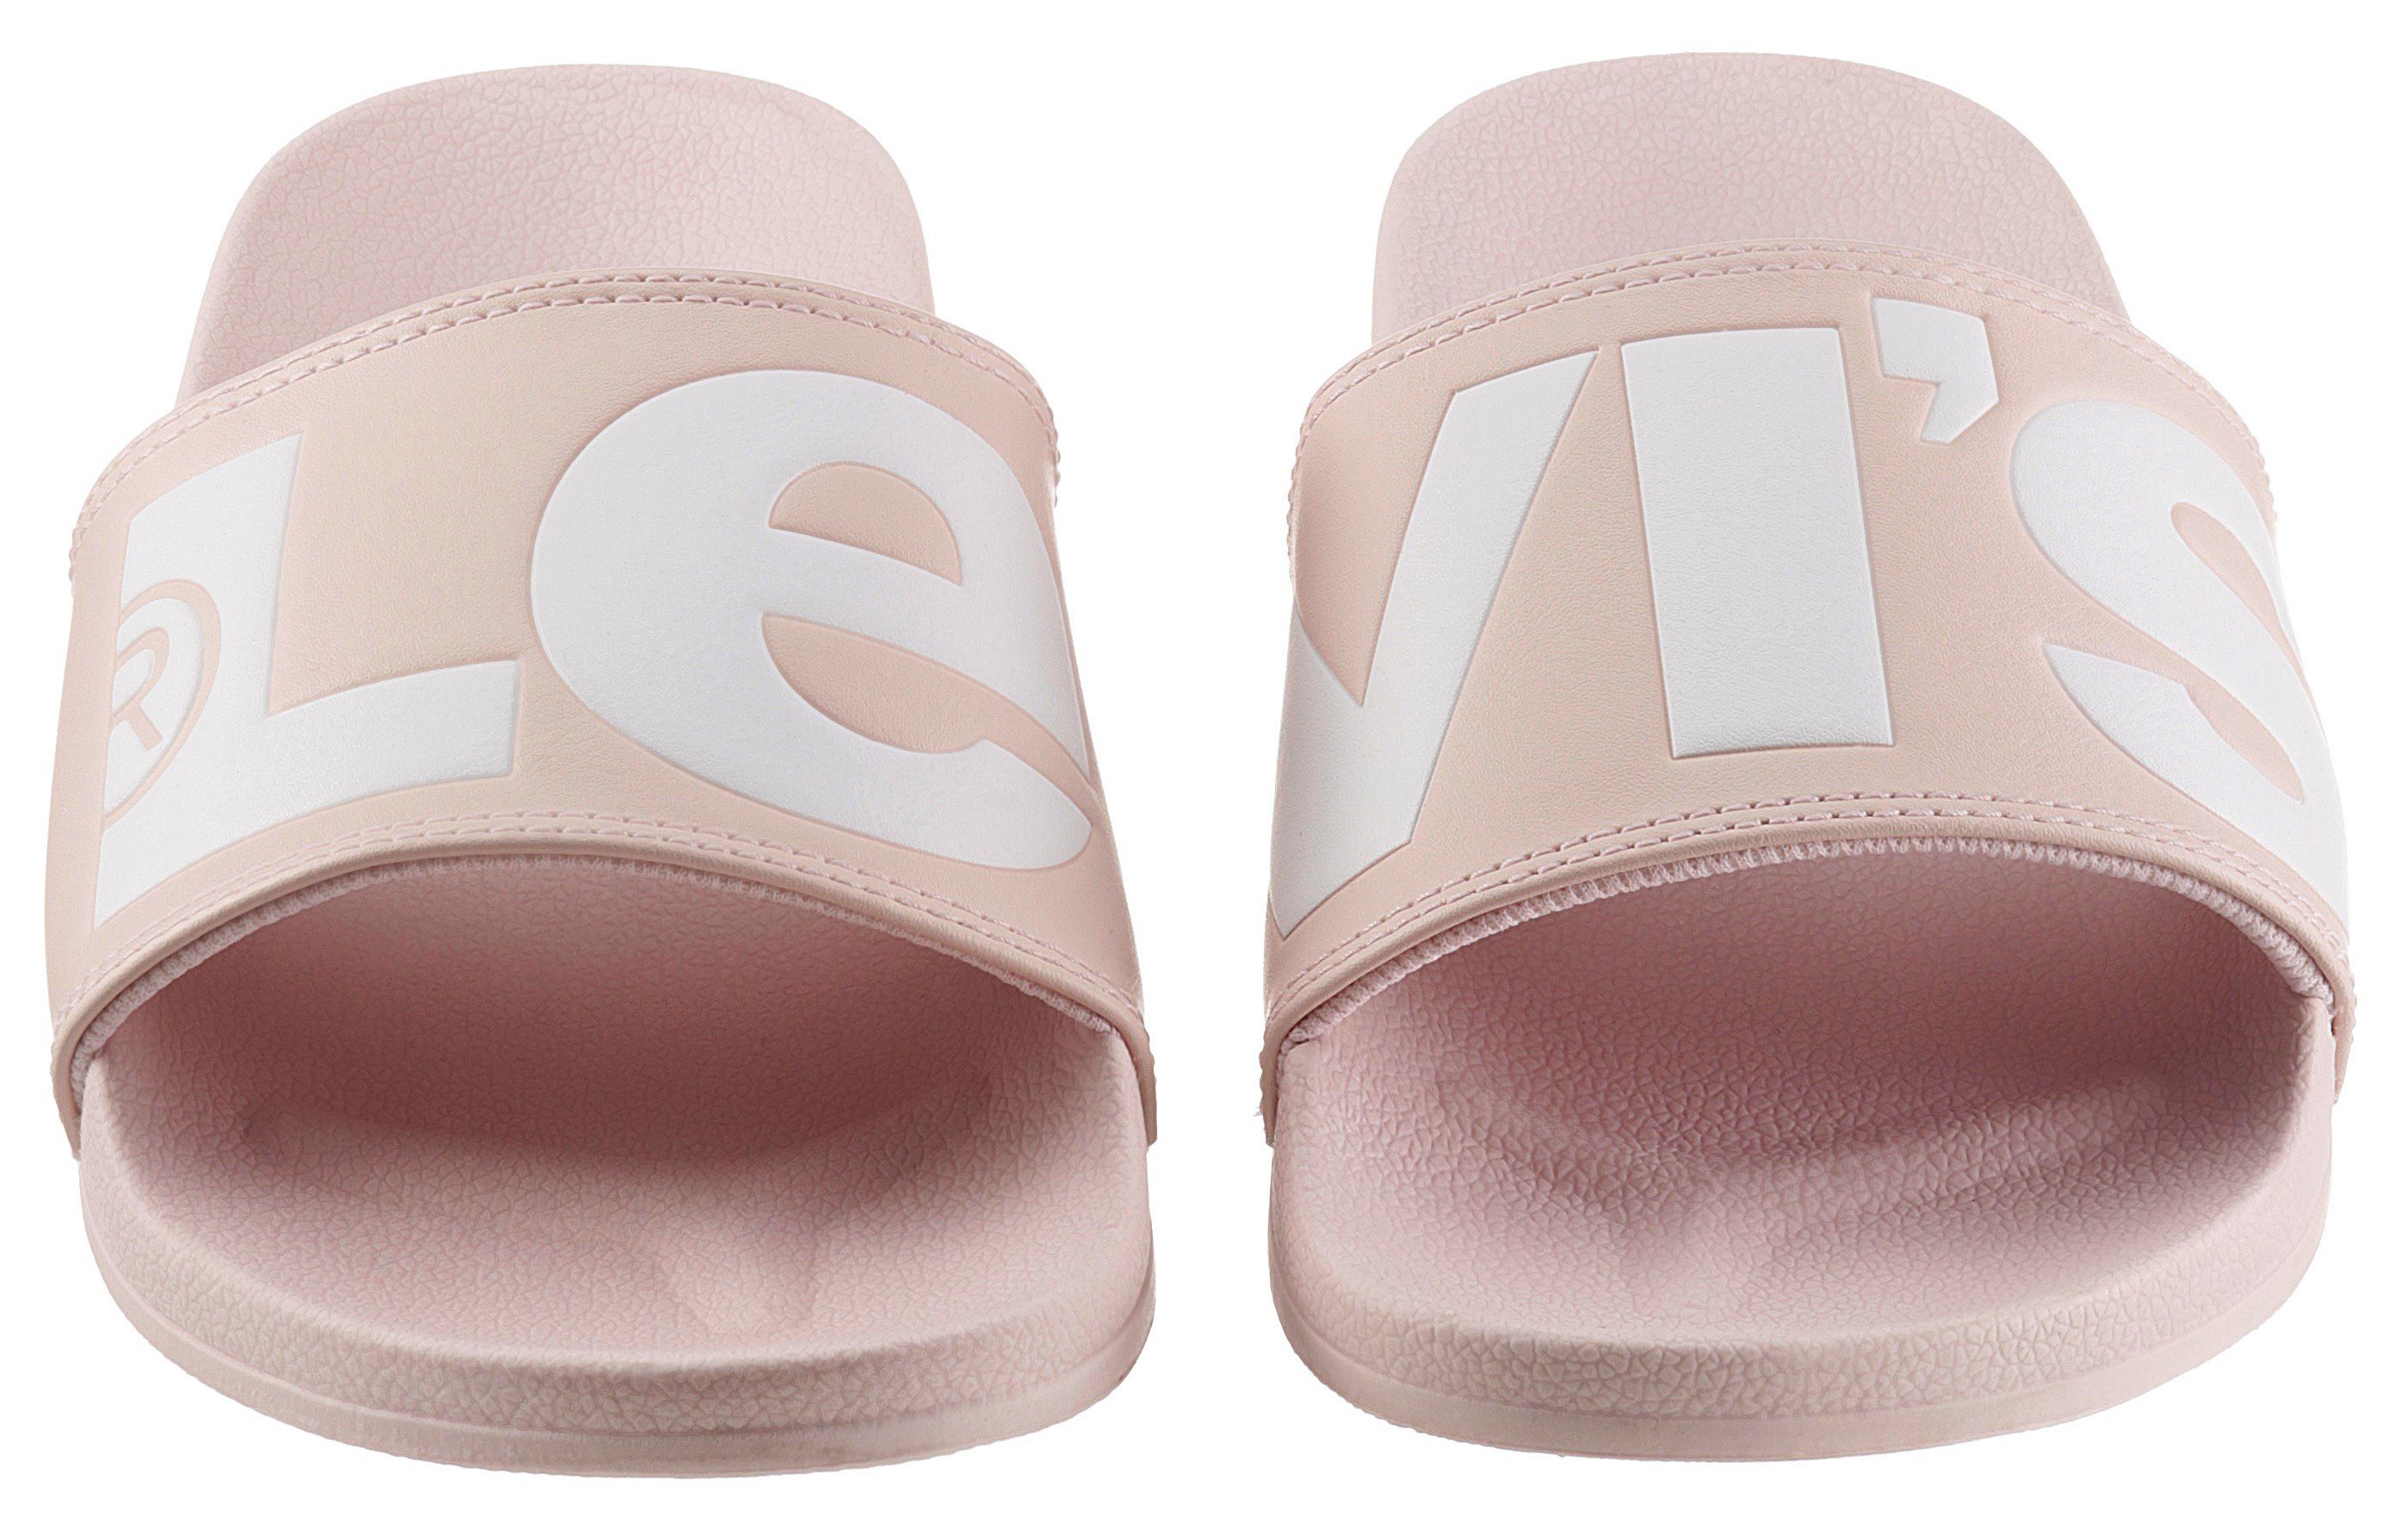 Levi's® June LS Badepantolette Logoschriftzug rosé-weiß auffälligem mit